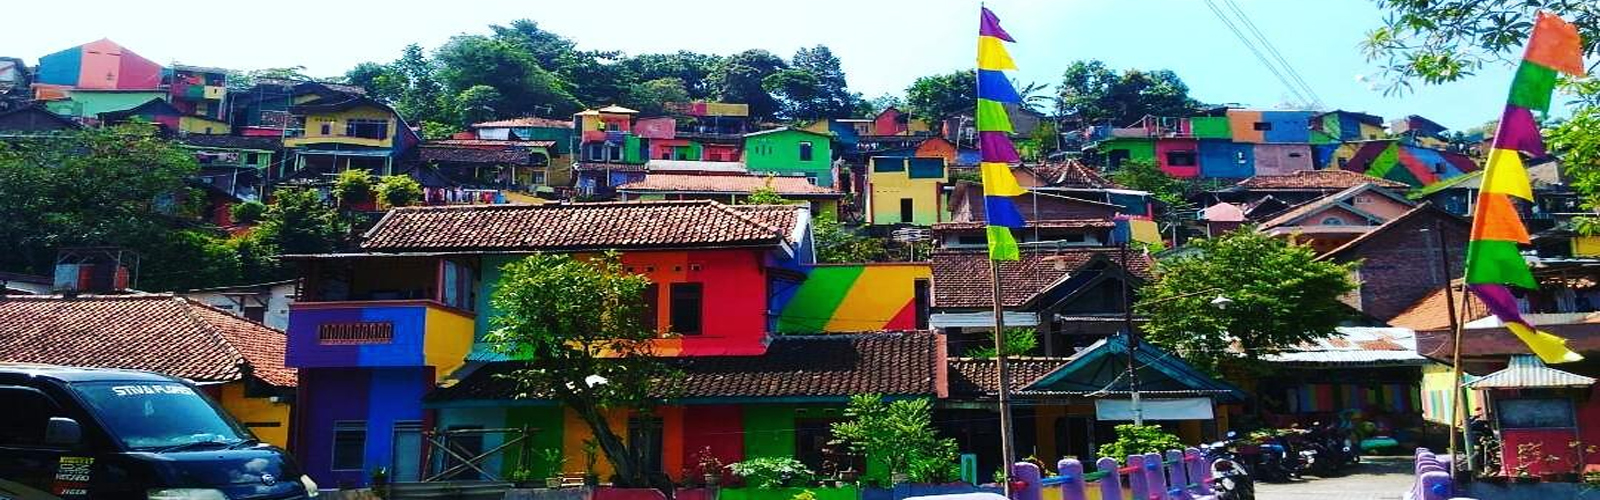 Indonesian slum is now 'Rainbow Village'